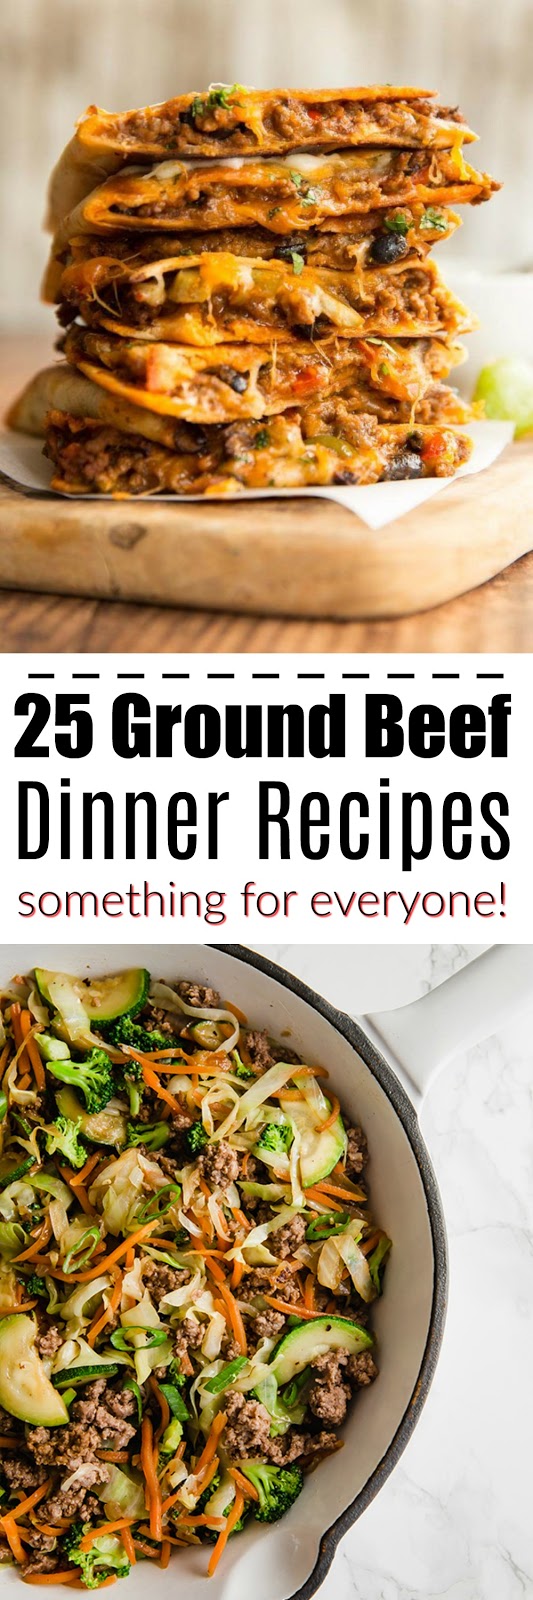 25 ground beef dinner recipes